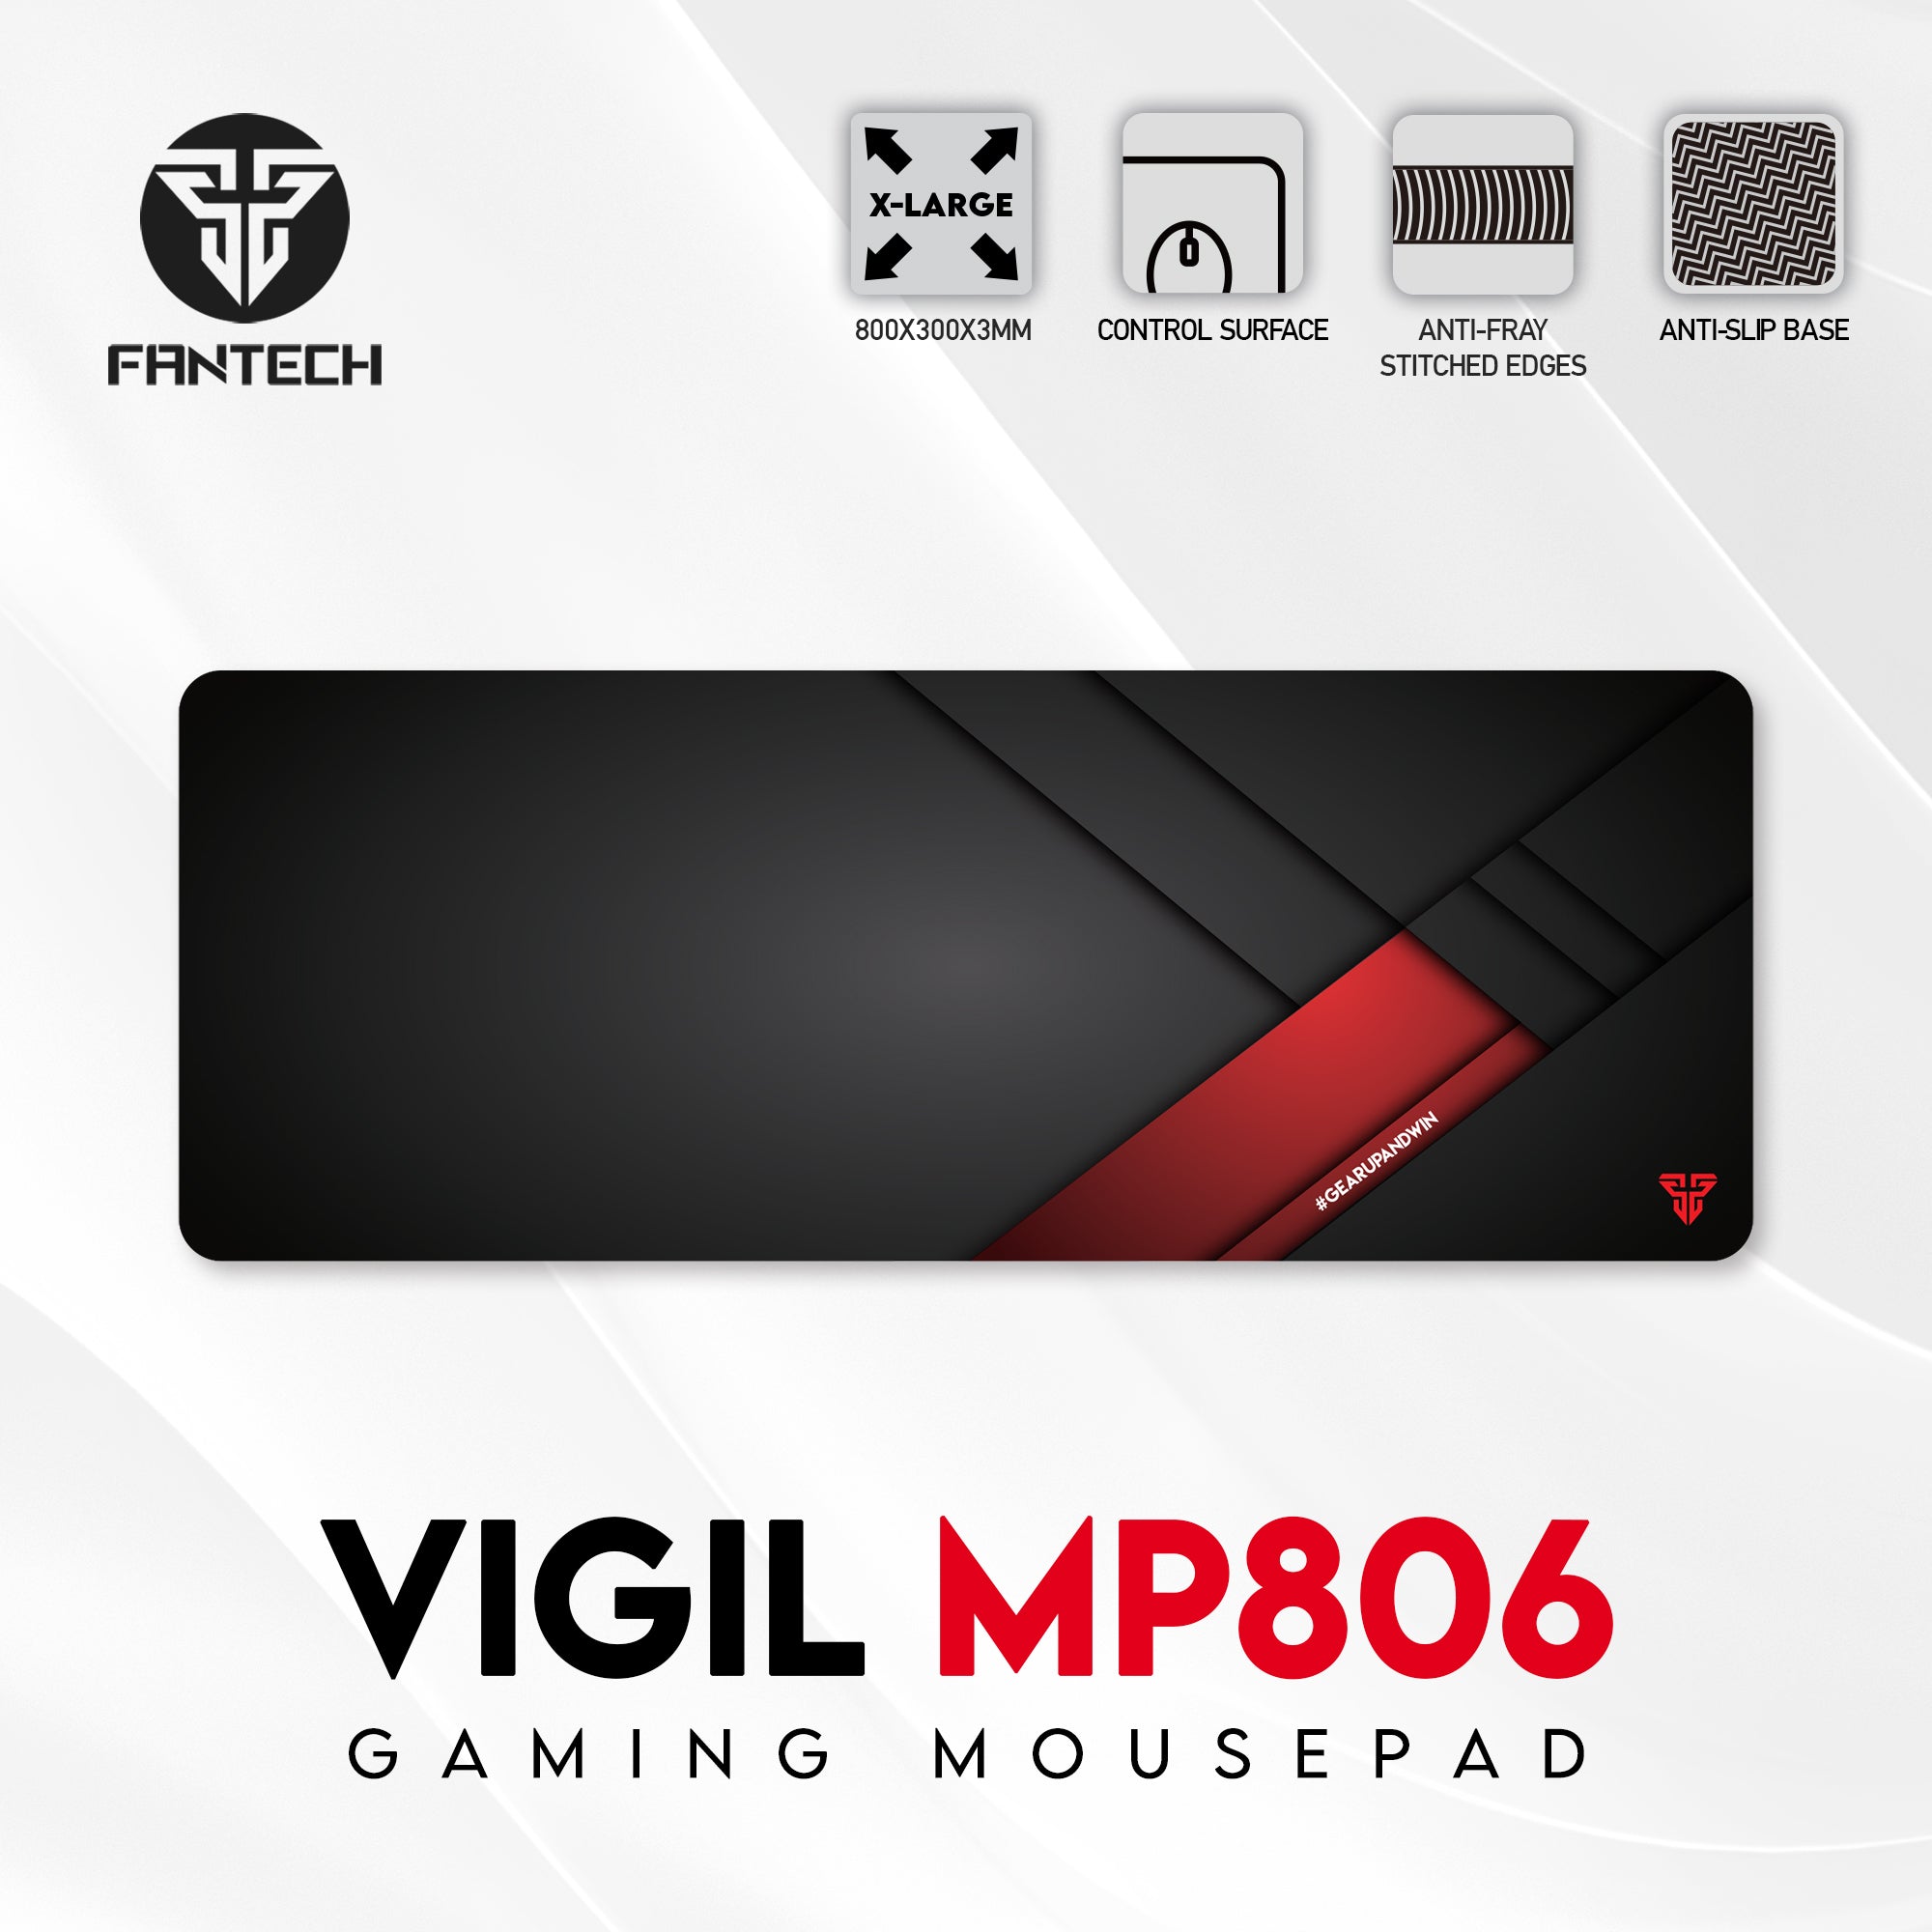 Fantech Vigil MP806 Gaming Mouse Pad JOD 10